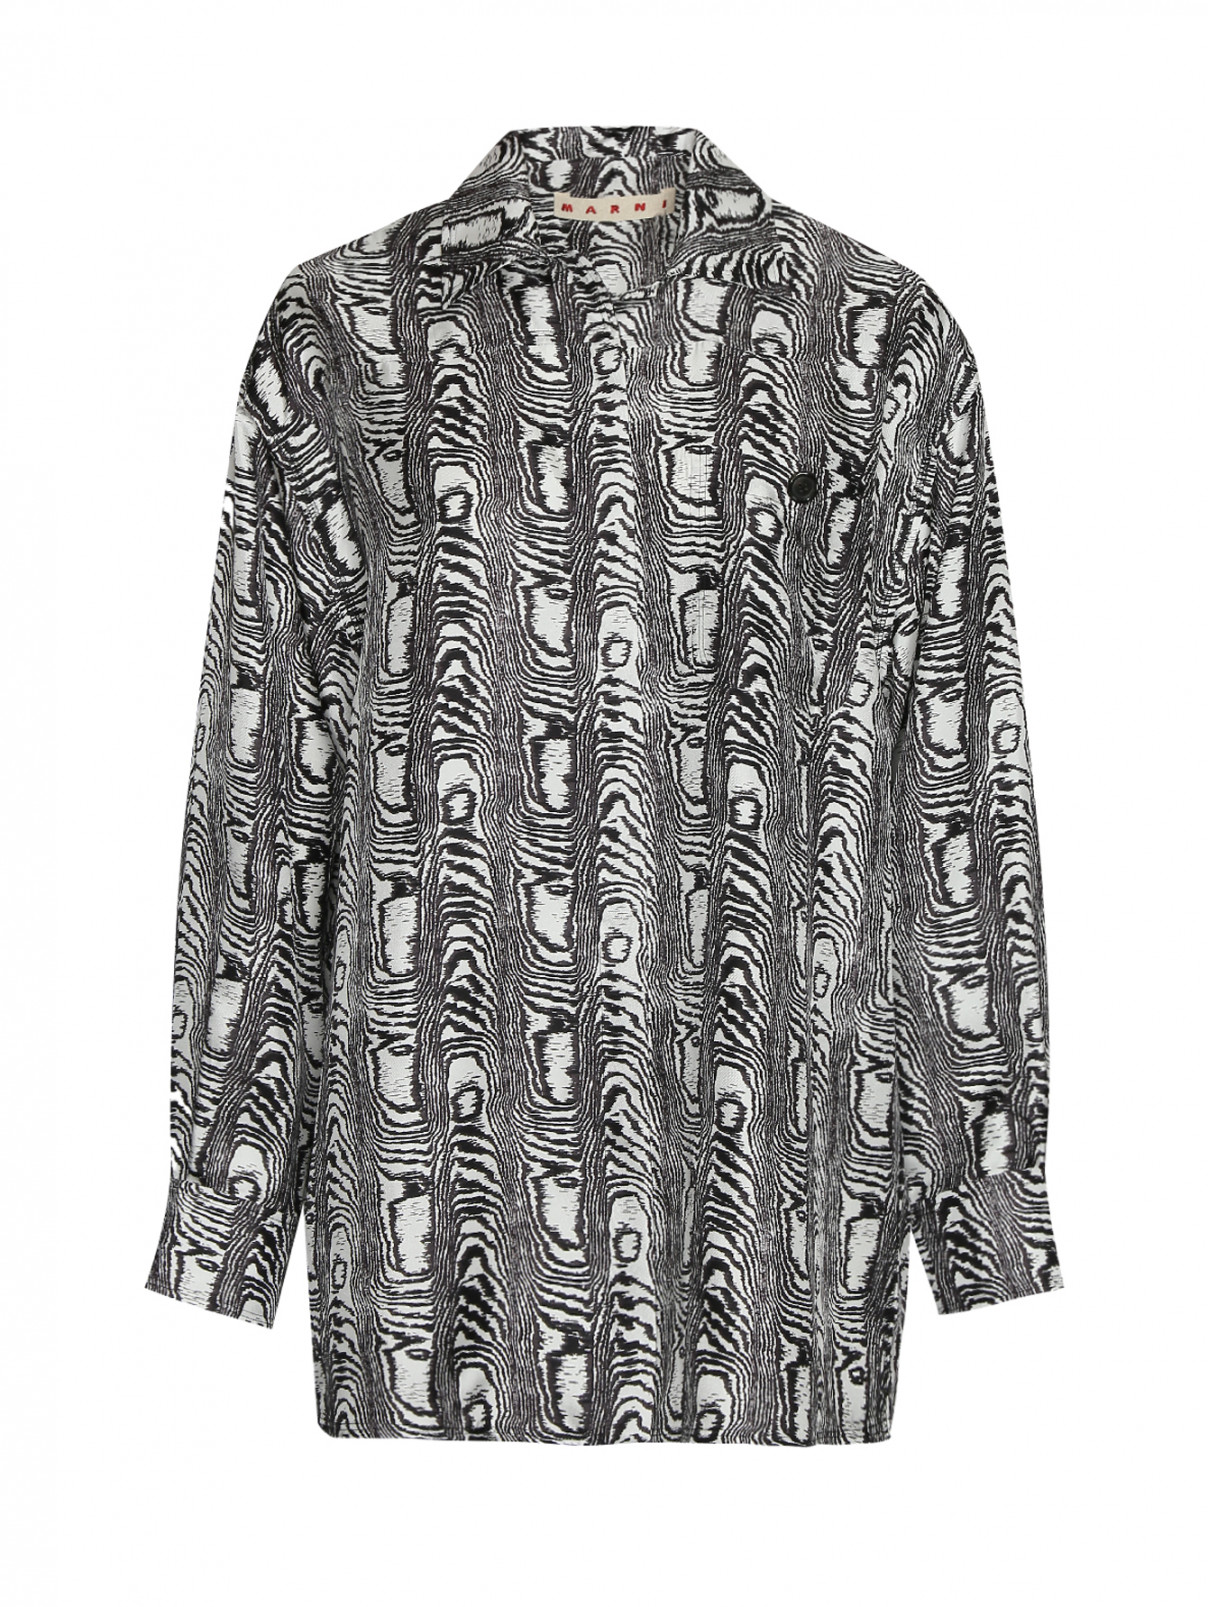 Блуза шелковая с узором Marni  –  Общий вид  – Цвет:  Узор